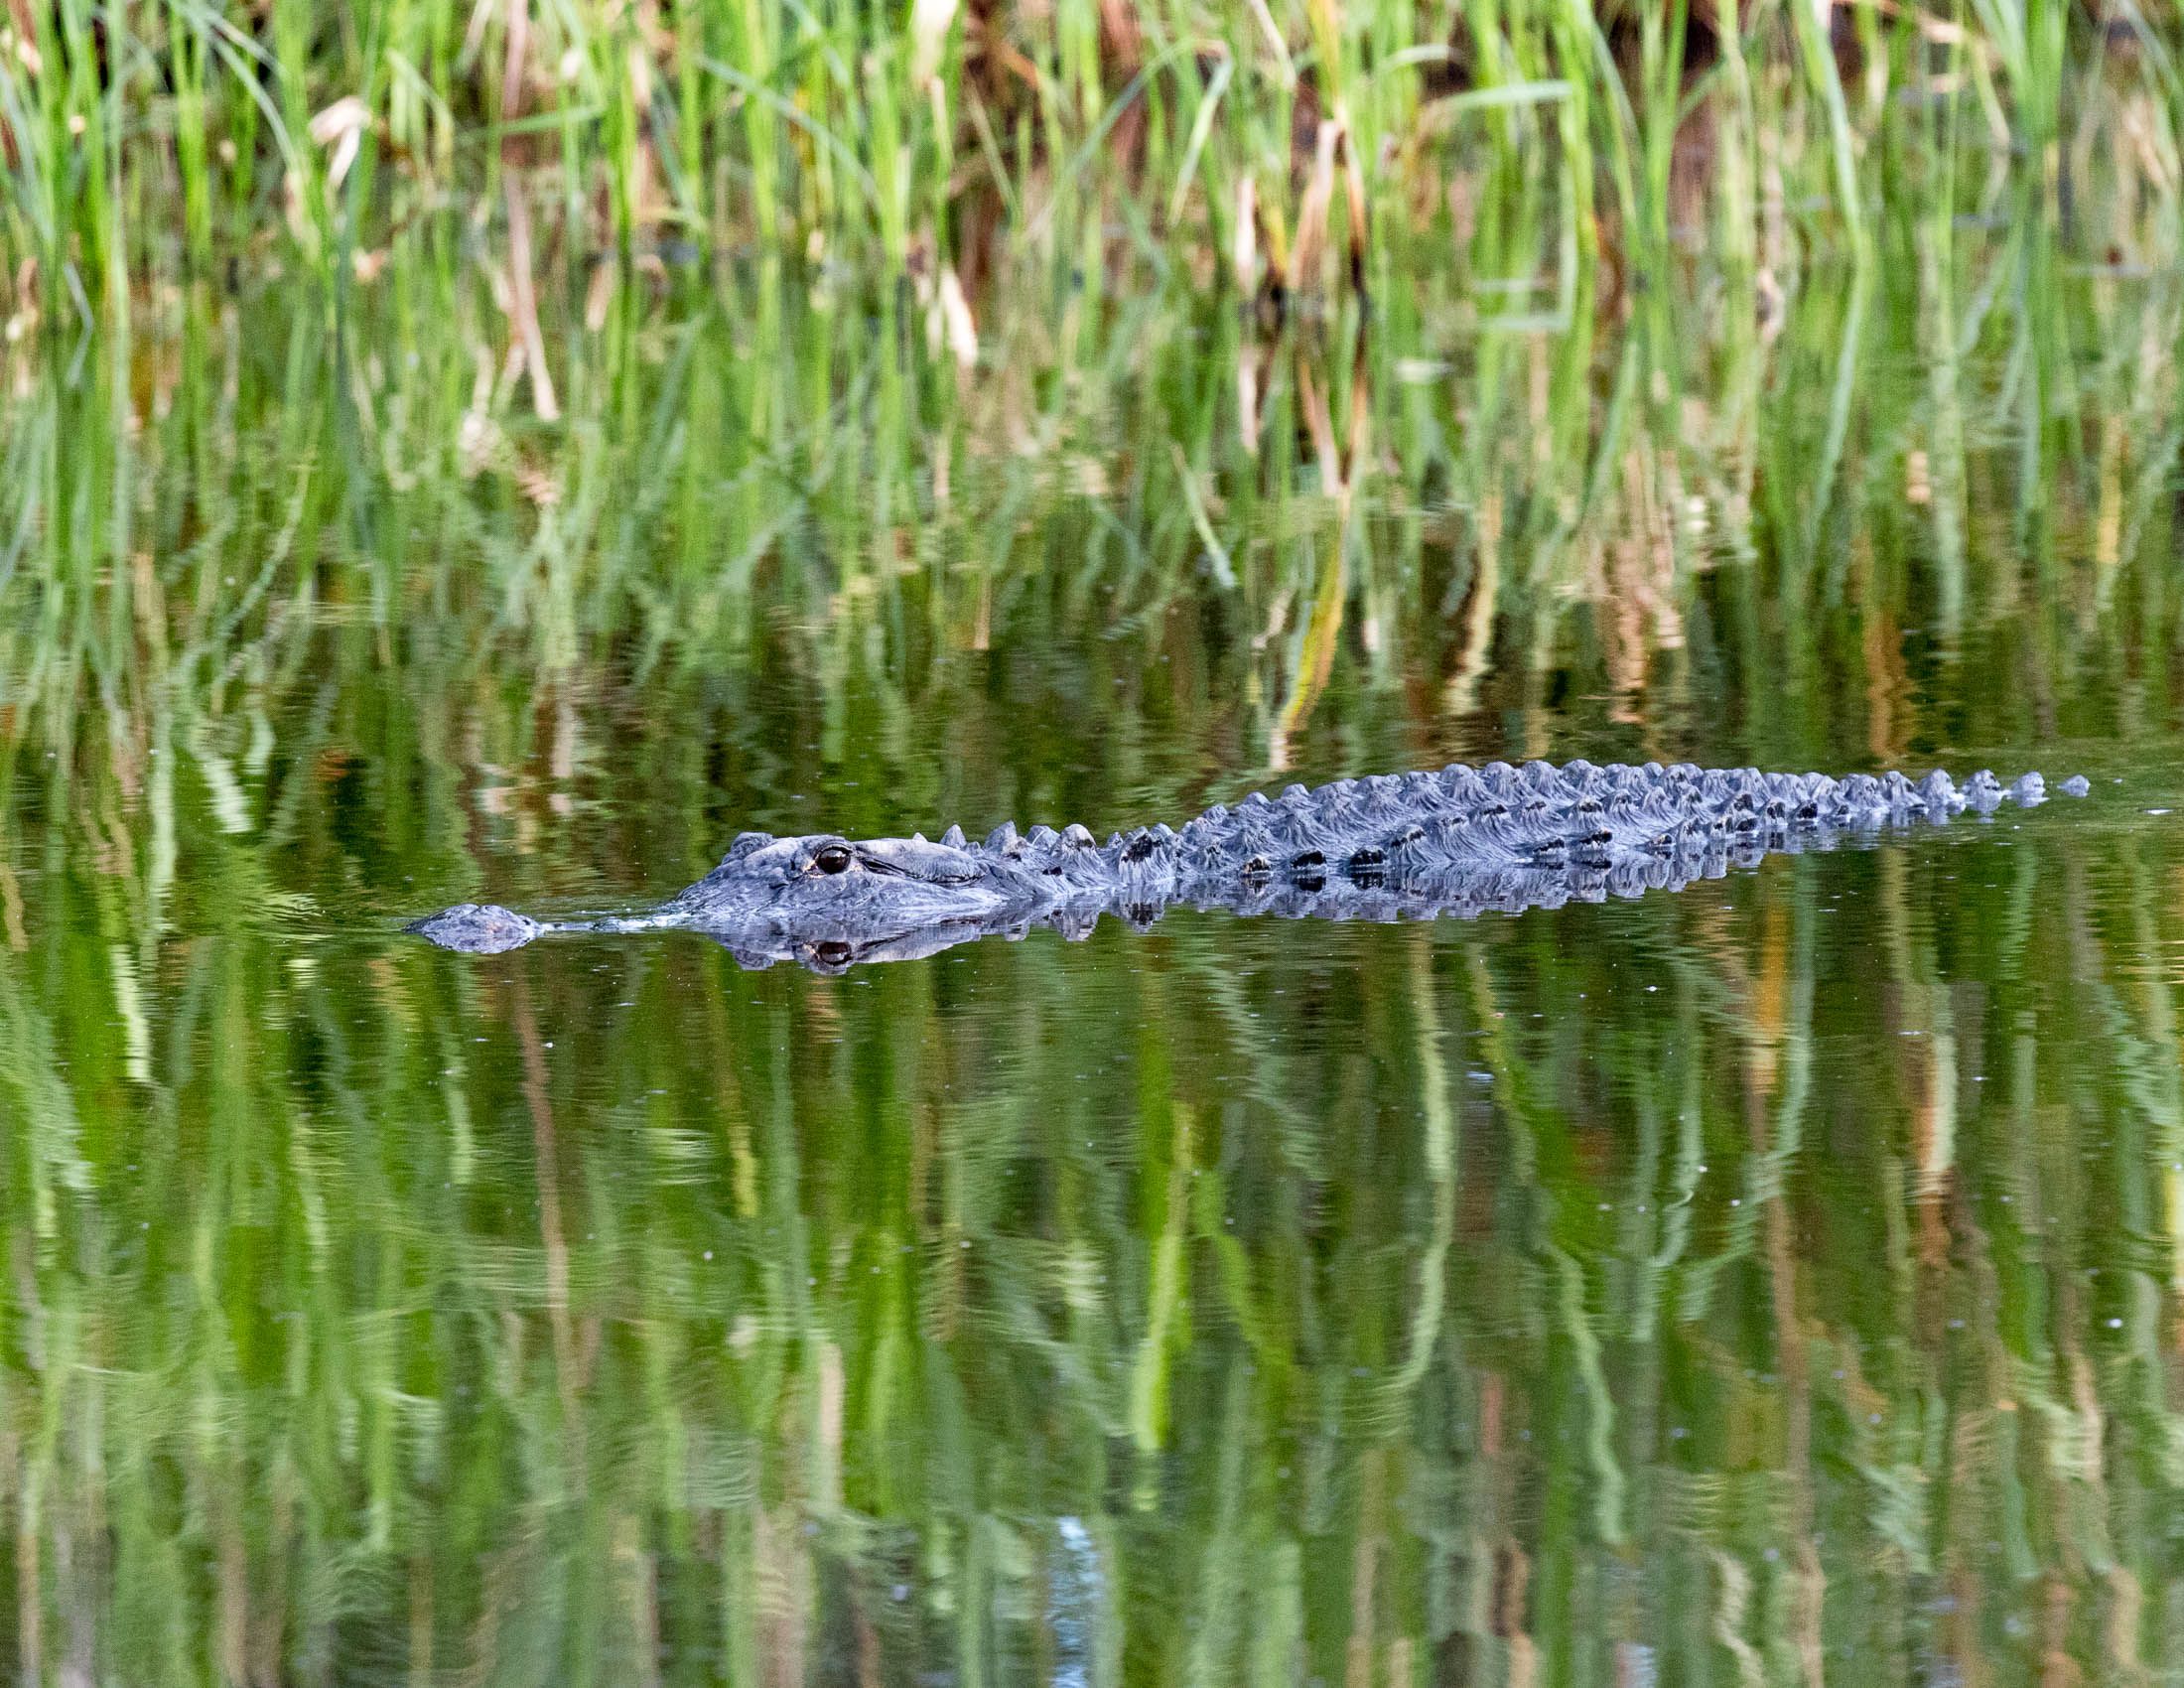 Alligators of Ace Basin, South Carolina-8.jpg